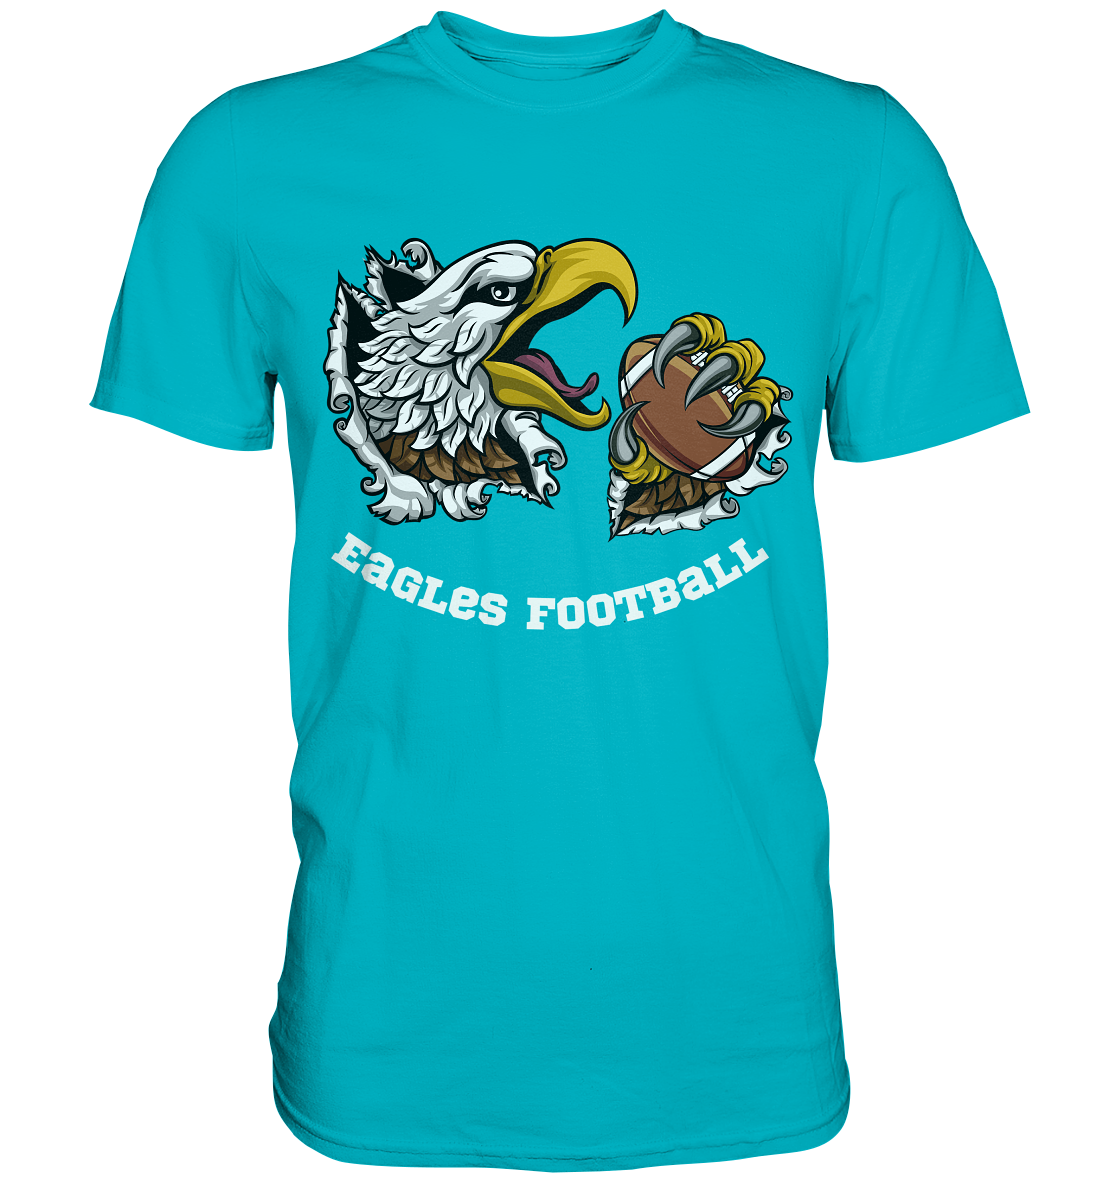 Eagles Football - Premium Shirt - Football Unity Football Unity